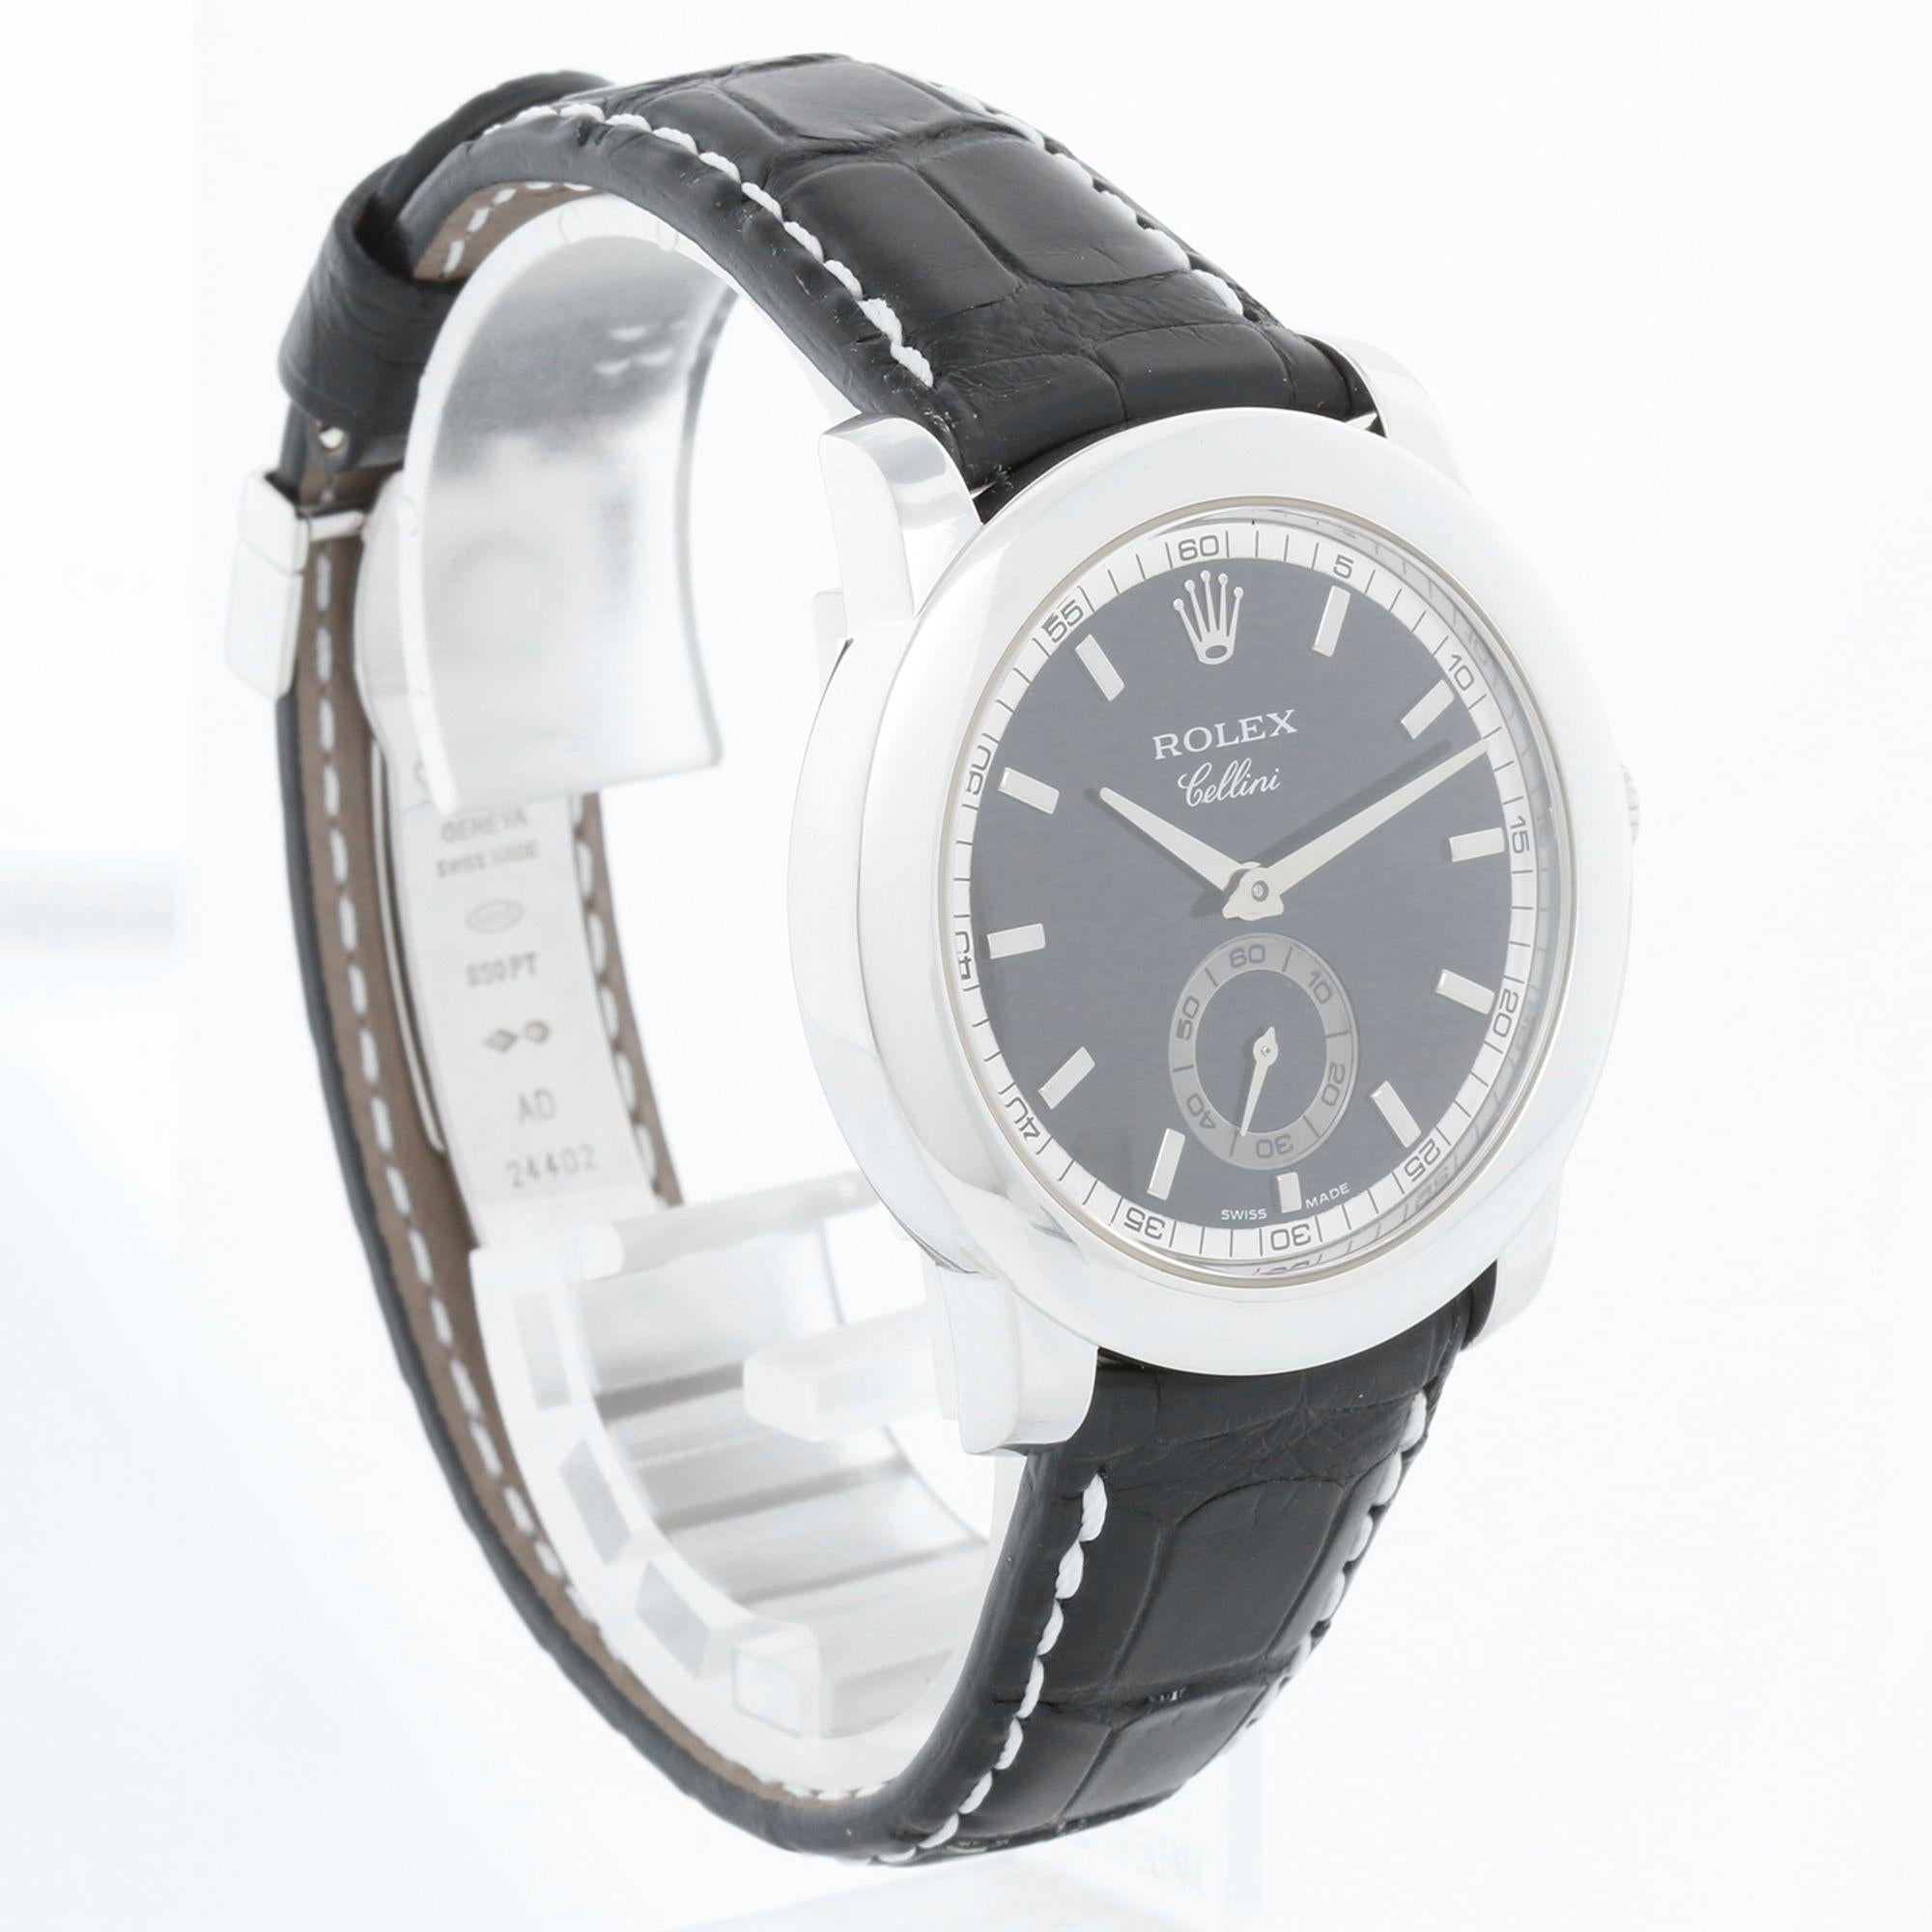 Rolex Cellini Cellinium Men's Platinum Watch with Dial 5241/6 For Sale 1